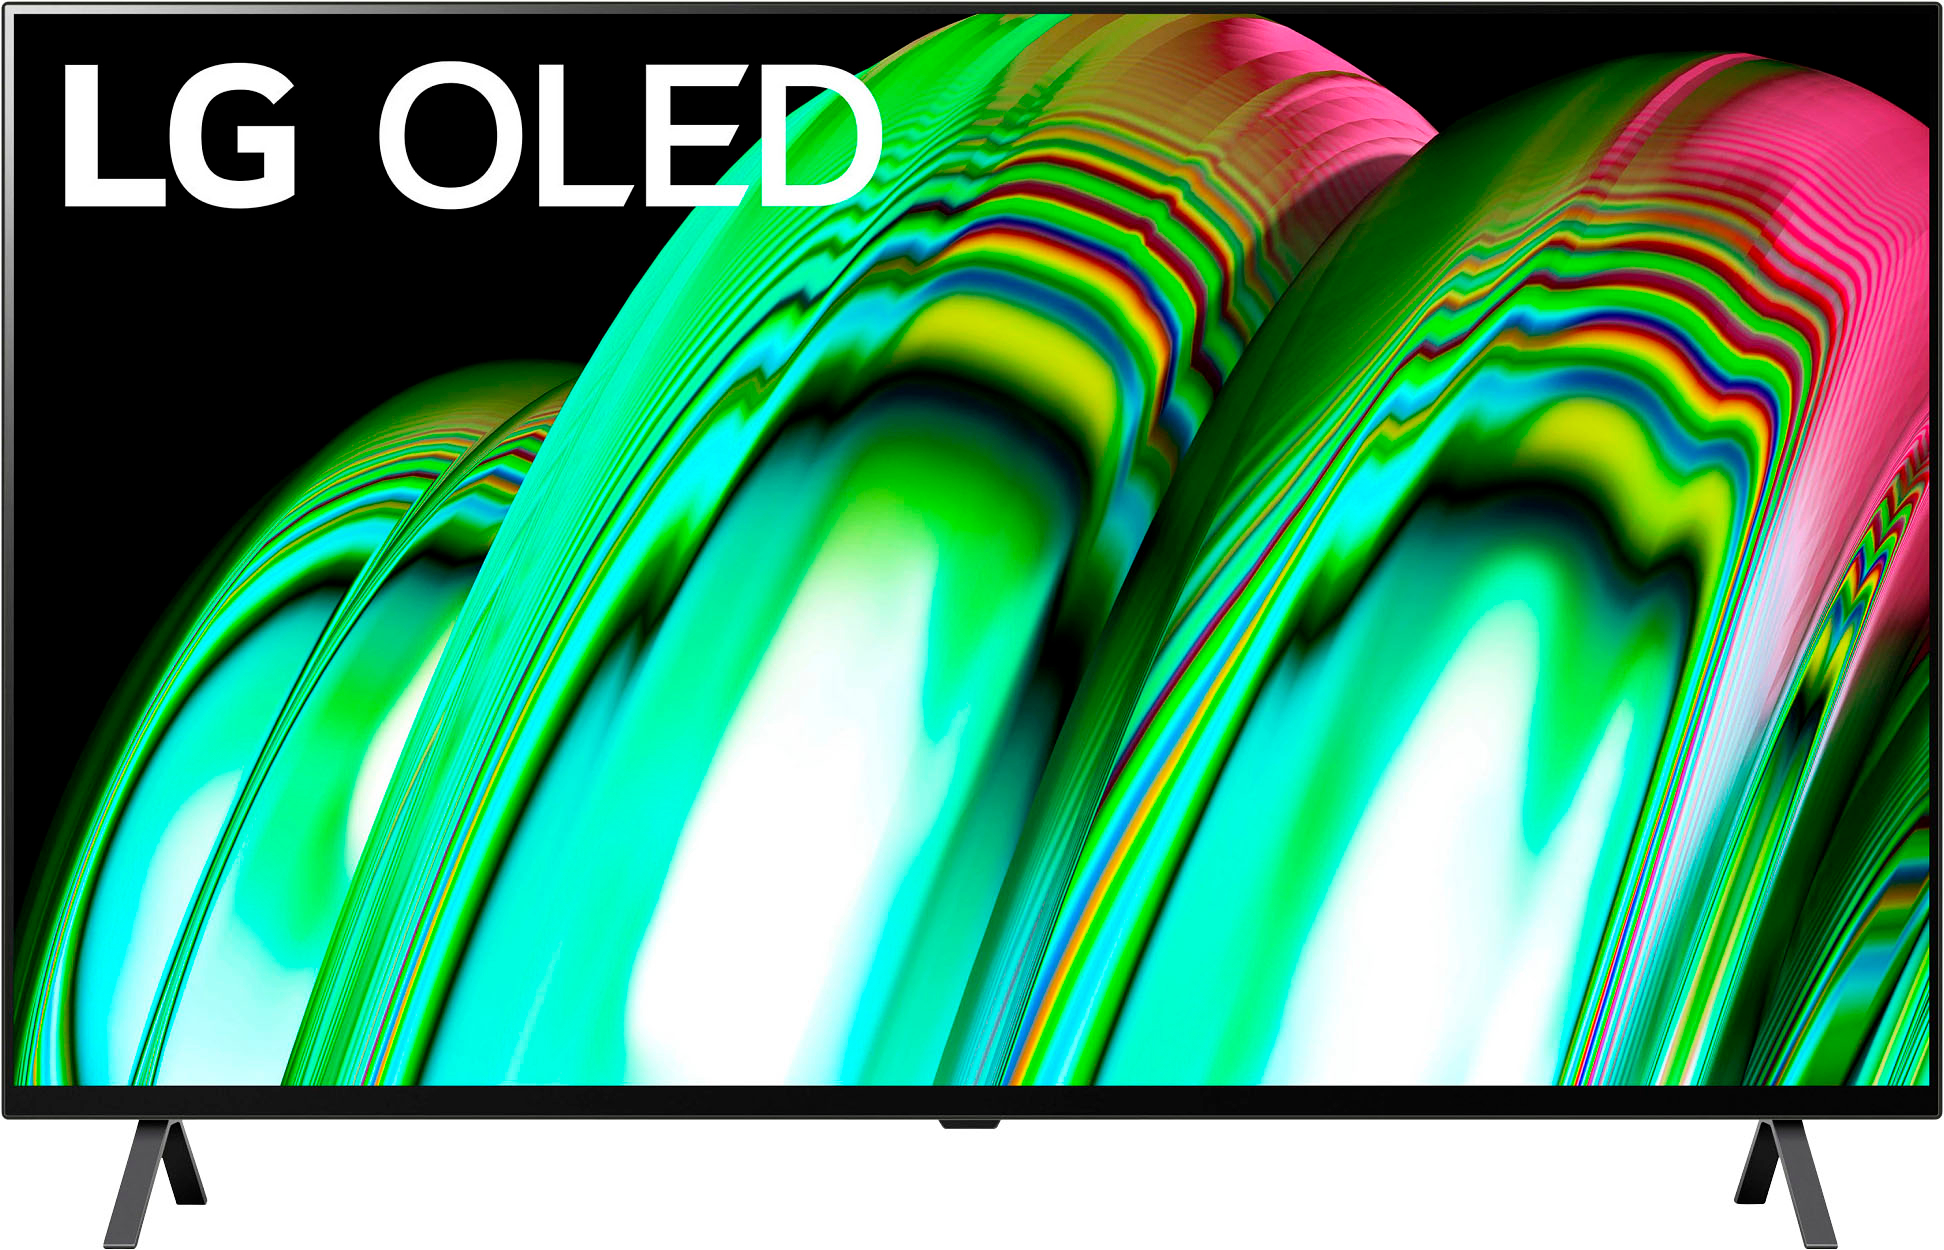 LG 48" Class A2 Series OLED 4K UHD Smart webOS TV OLED48A2PUA - Best Buy $549.99